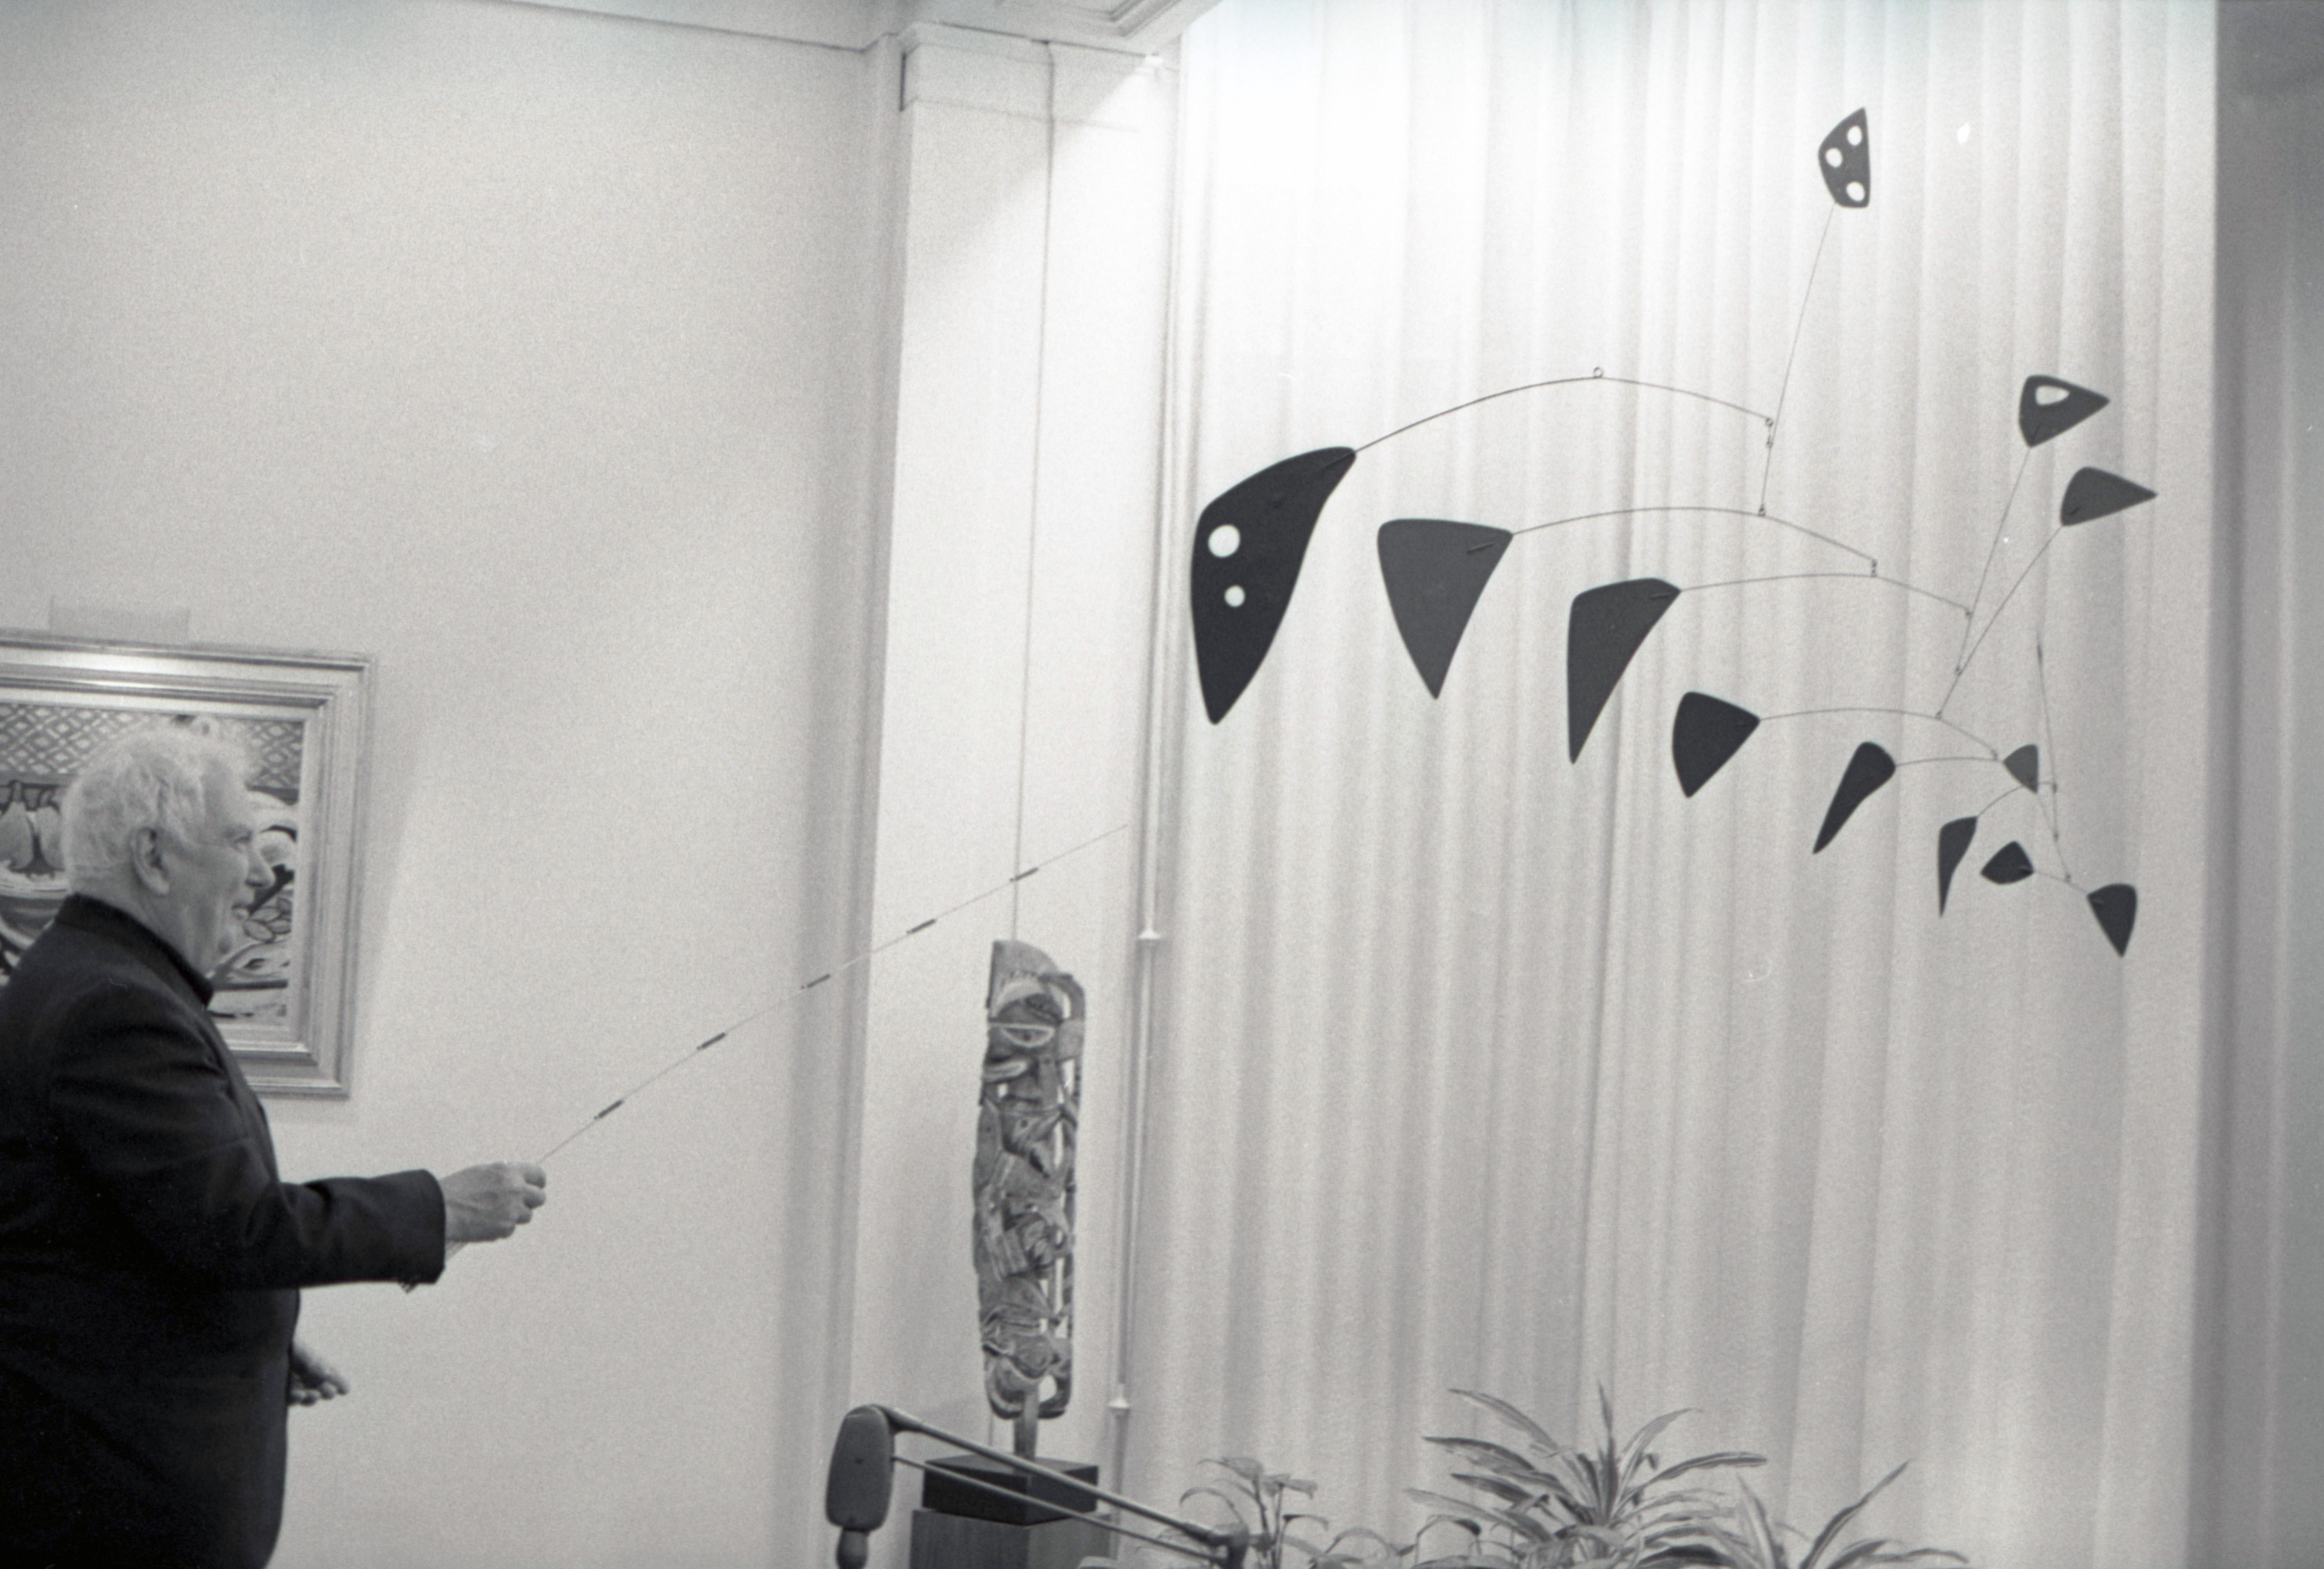 David Gahr Portrait Photograph - Surrealist Sculptor Alexander Calder, Black & White Photograph in New York, 1964